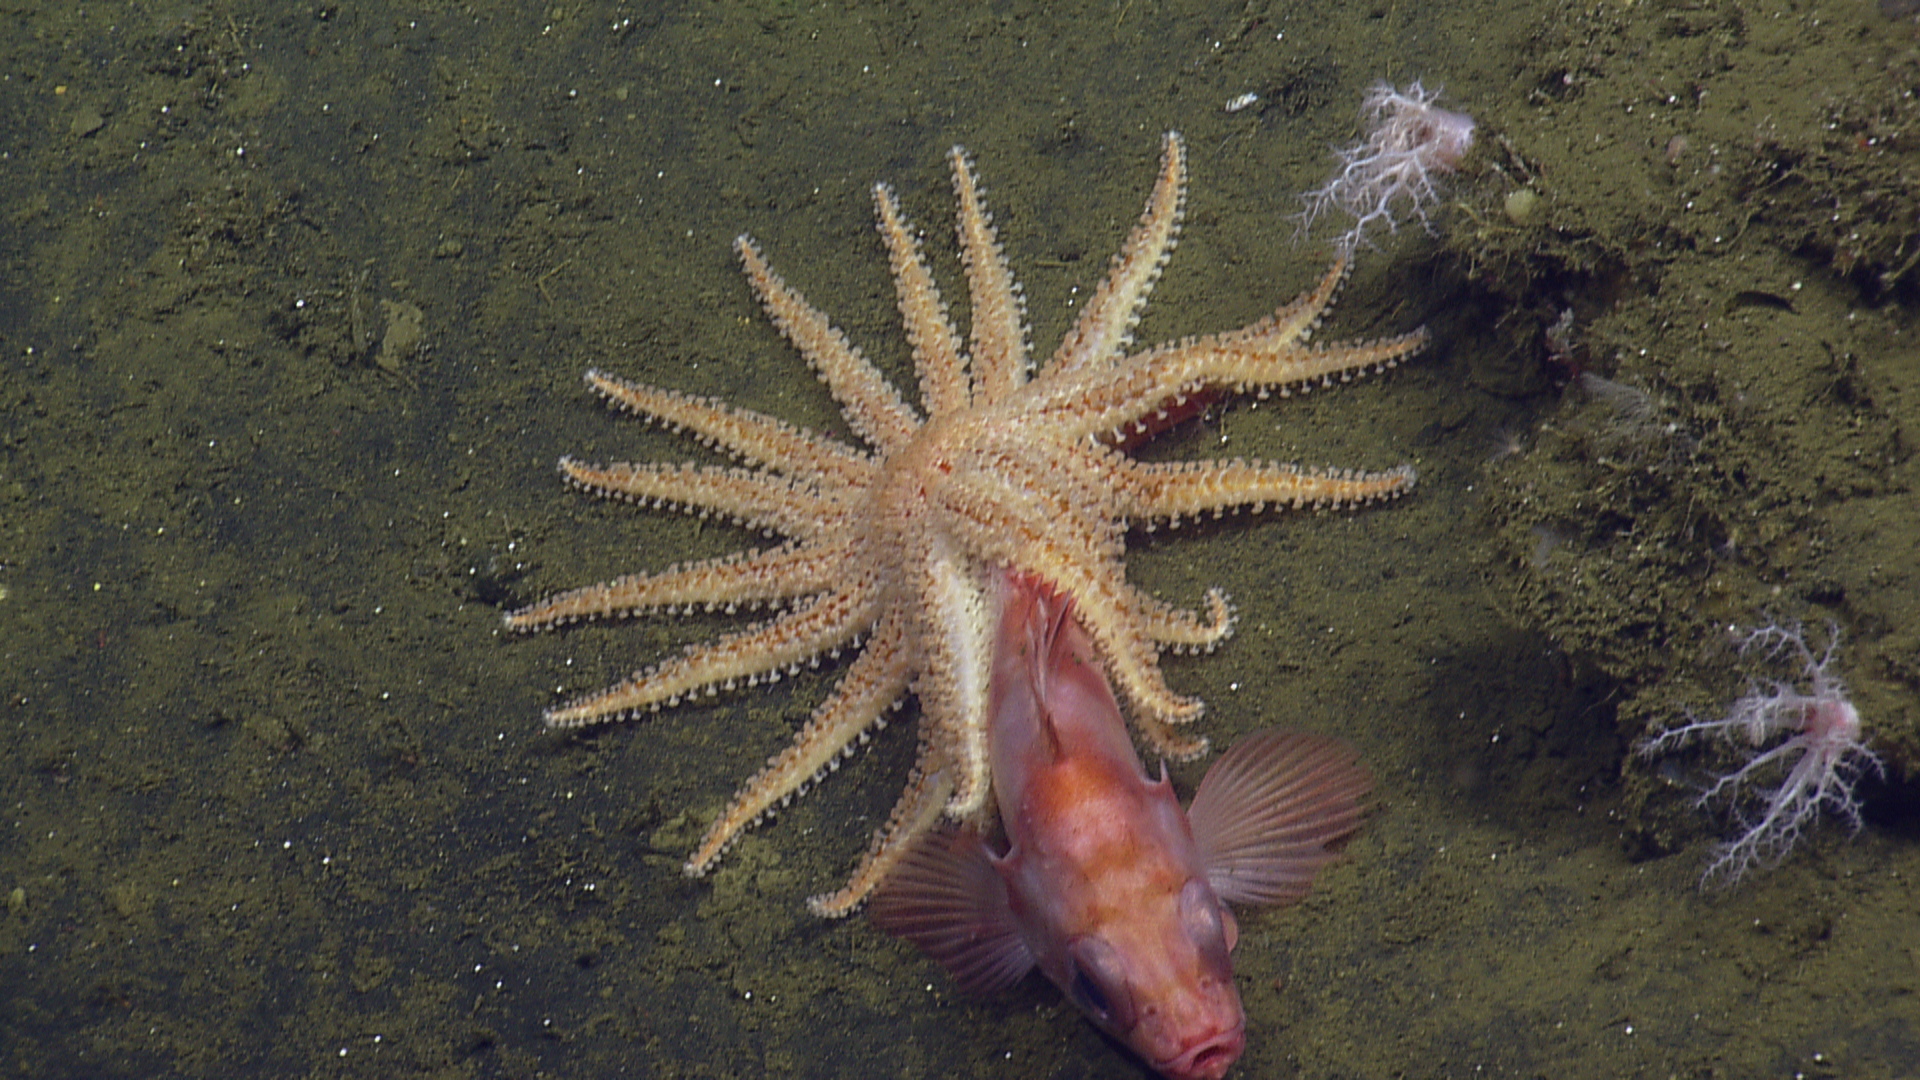 Sunflower sea star preying on rockfish. Photo by Ocean Exploration Trust/NOAA